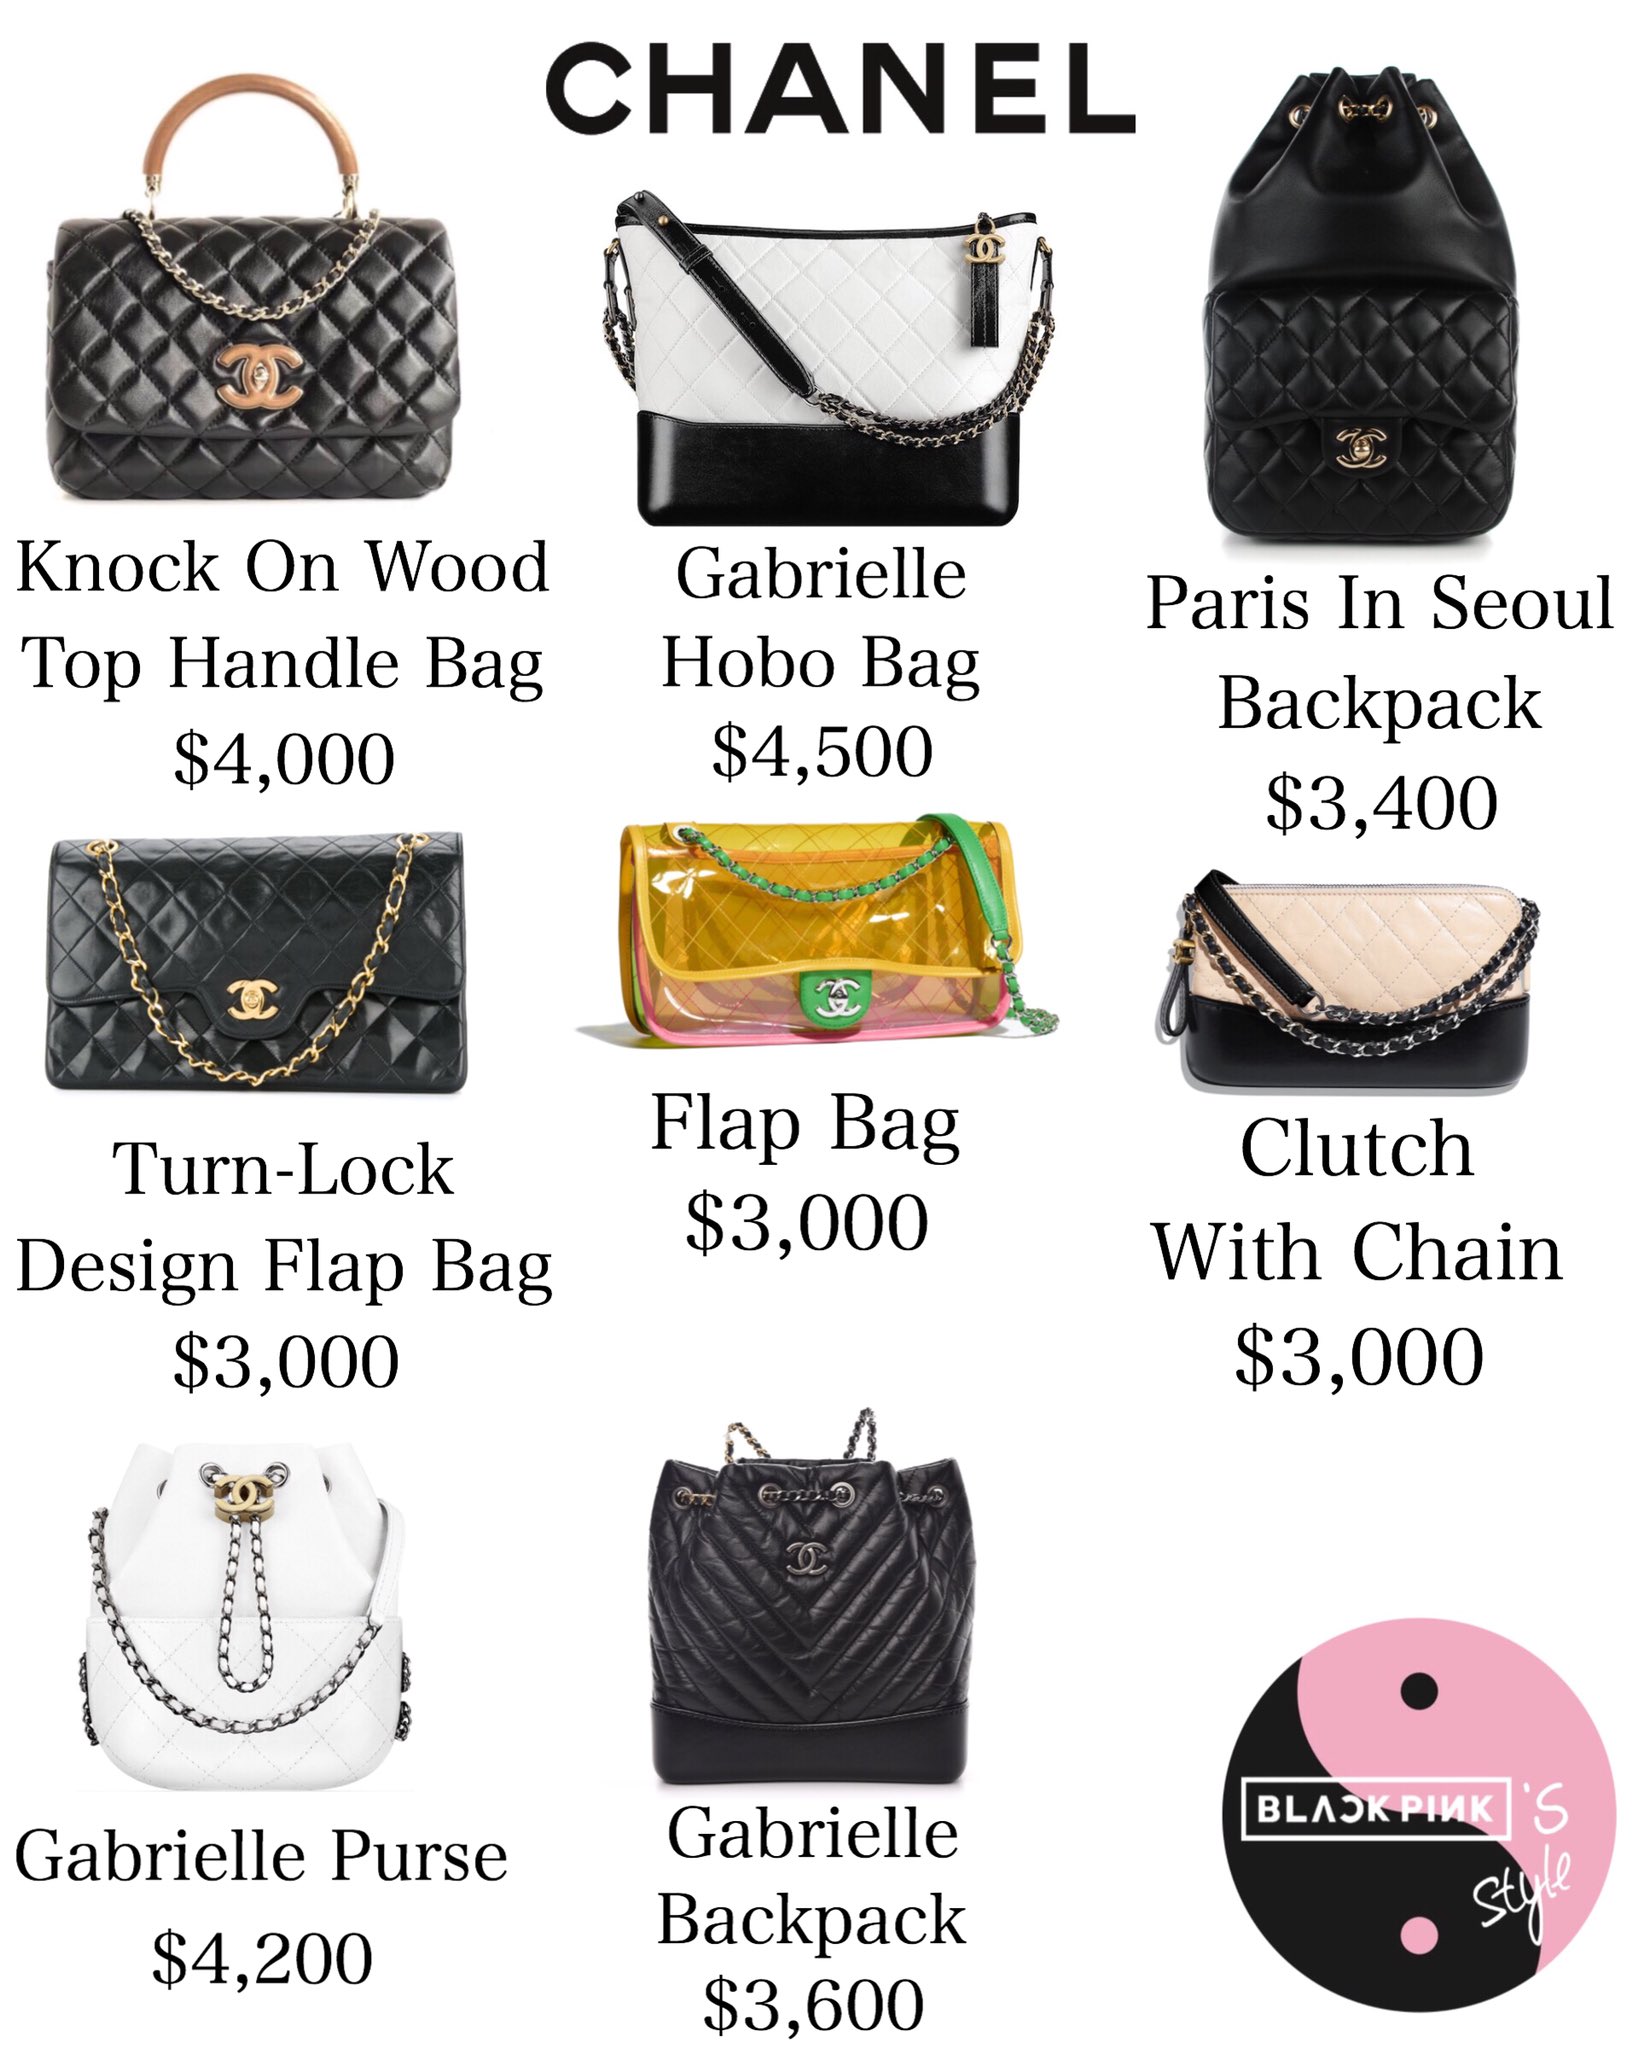 blackpink's style on X: Jennie's Handbag Collection #JENNIE